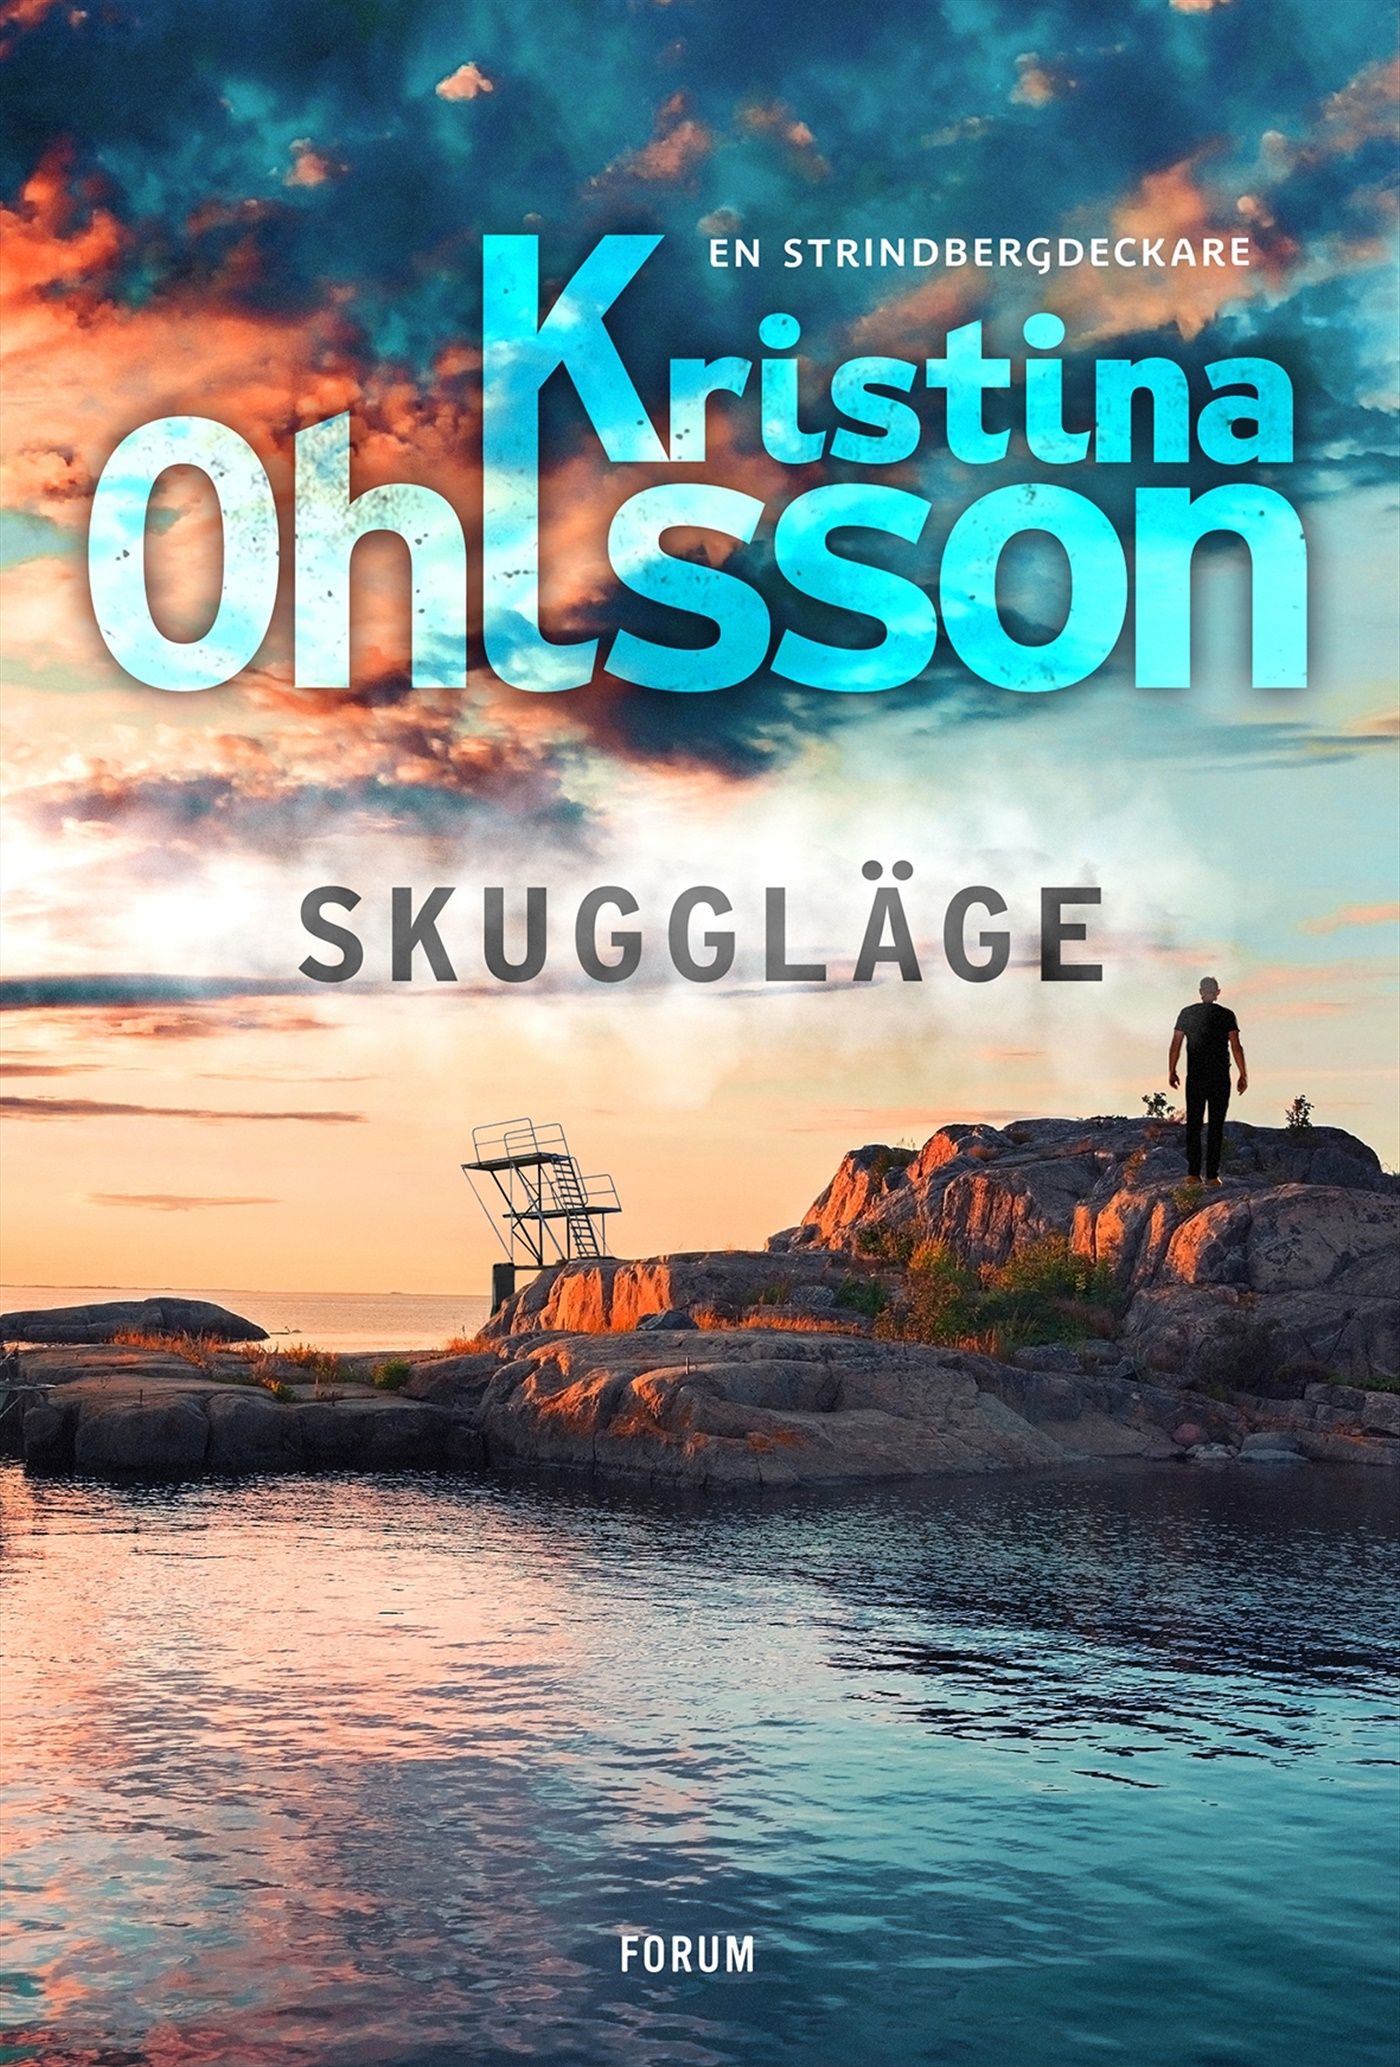 Skuggläge, eBook by Kristina Ohlsson